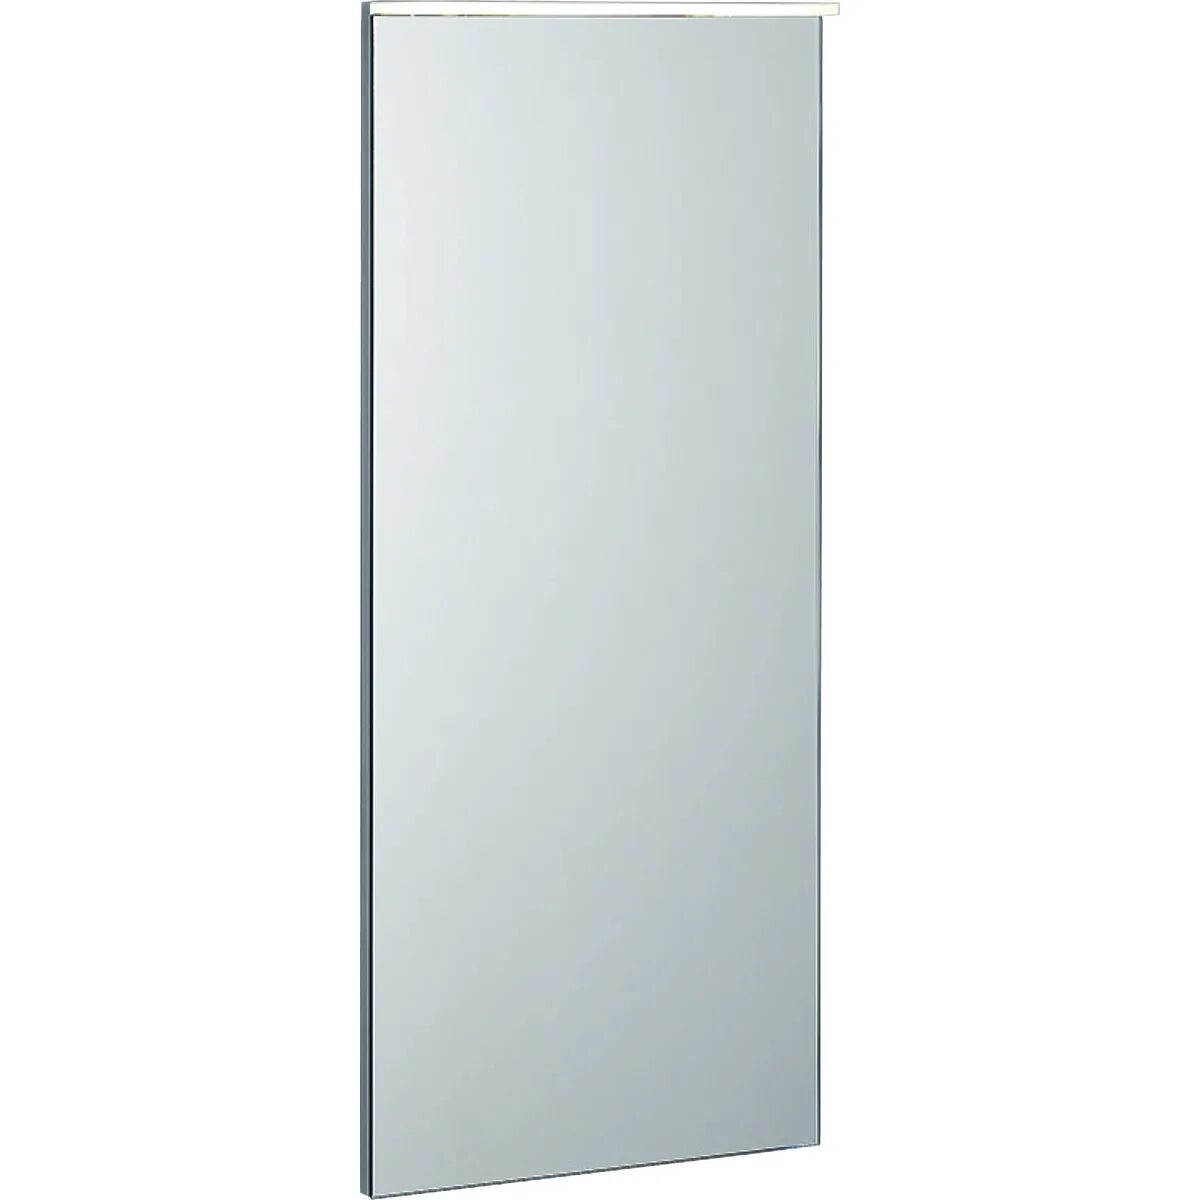 Зеркало xeno² с подсветкой, 900 x 710 мм. Зеркало Геберит Айкон. Keramag xeno2 зеркало. Зеркало 400х600.